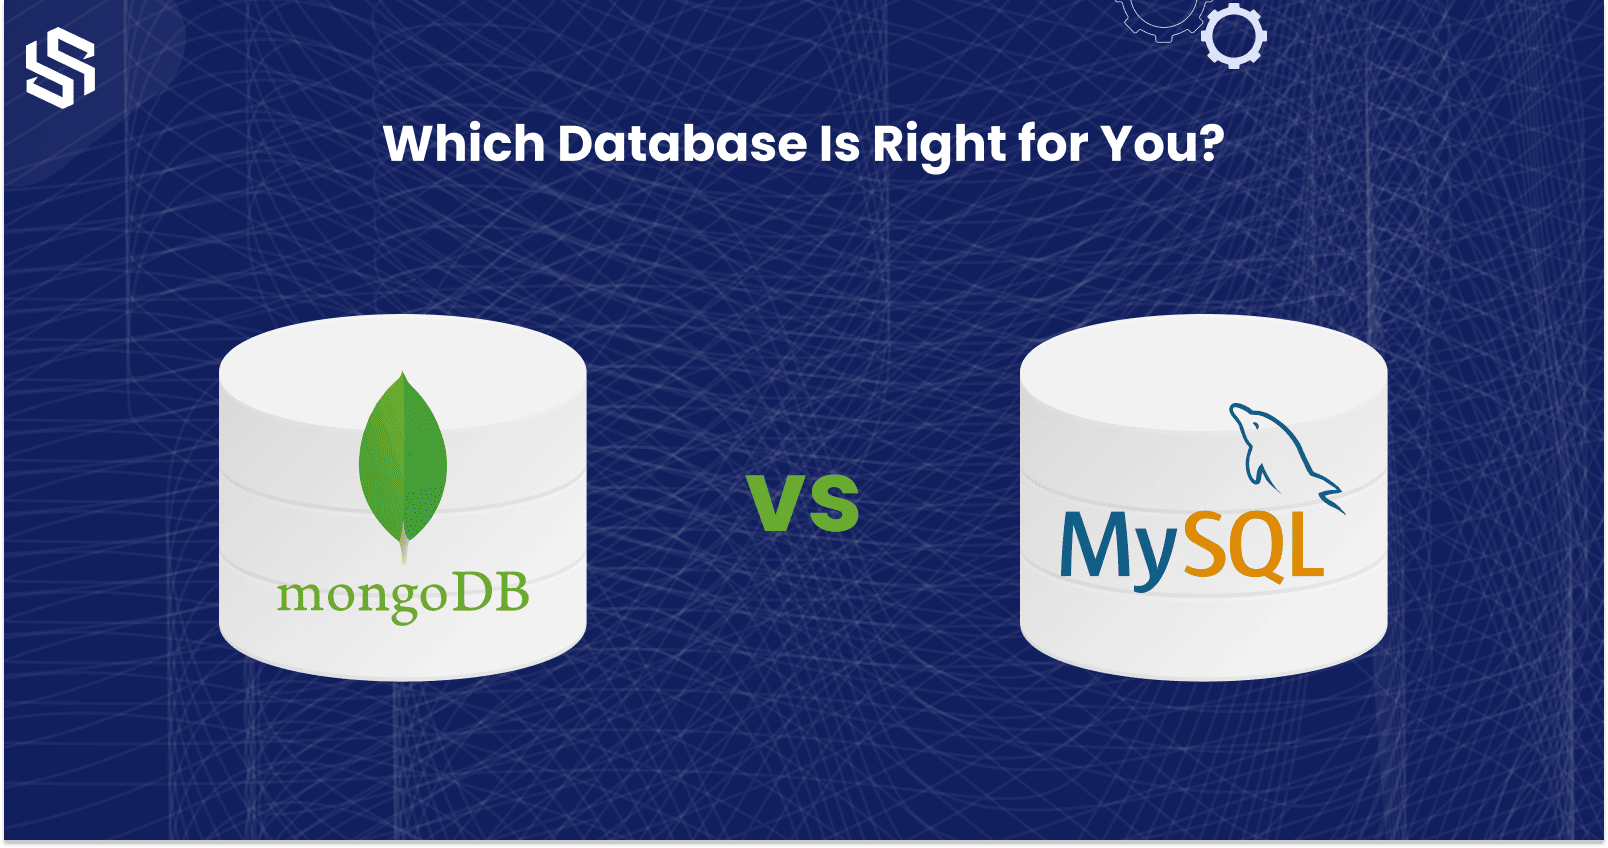 Mongo DB vs MYSQL